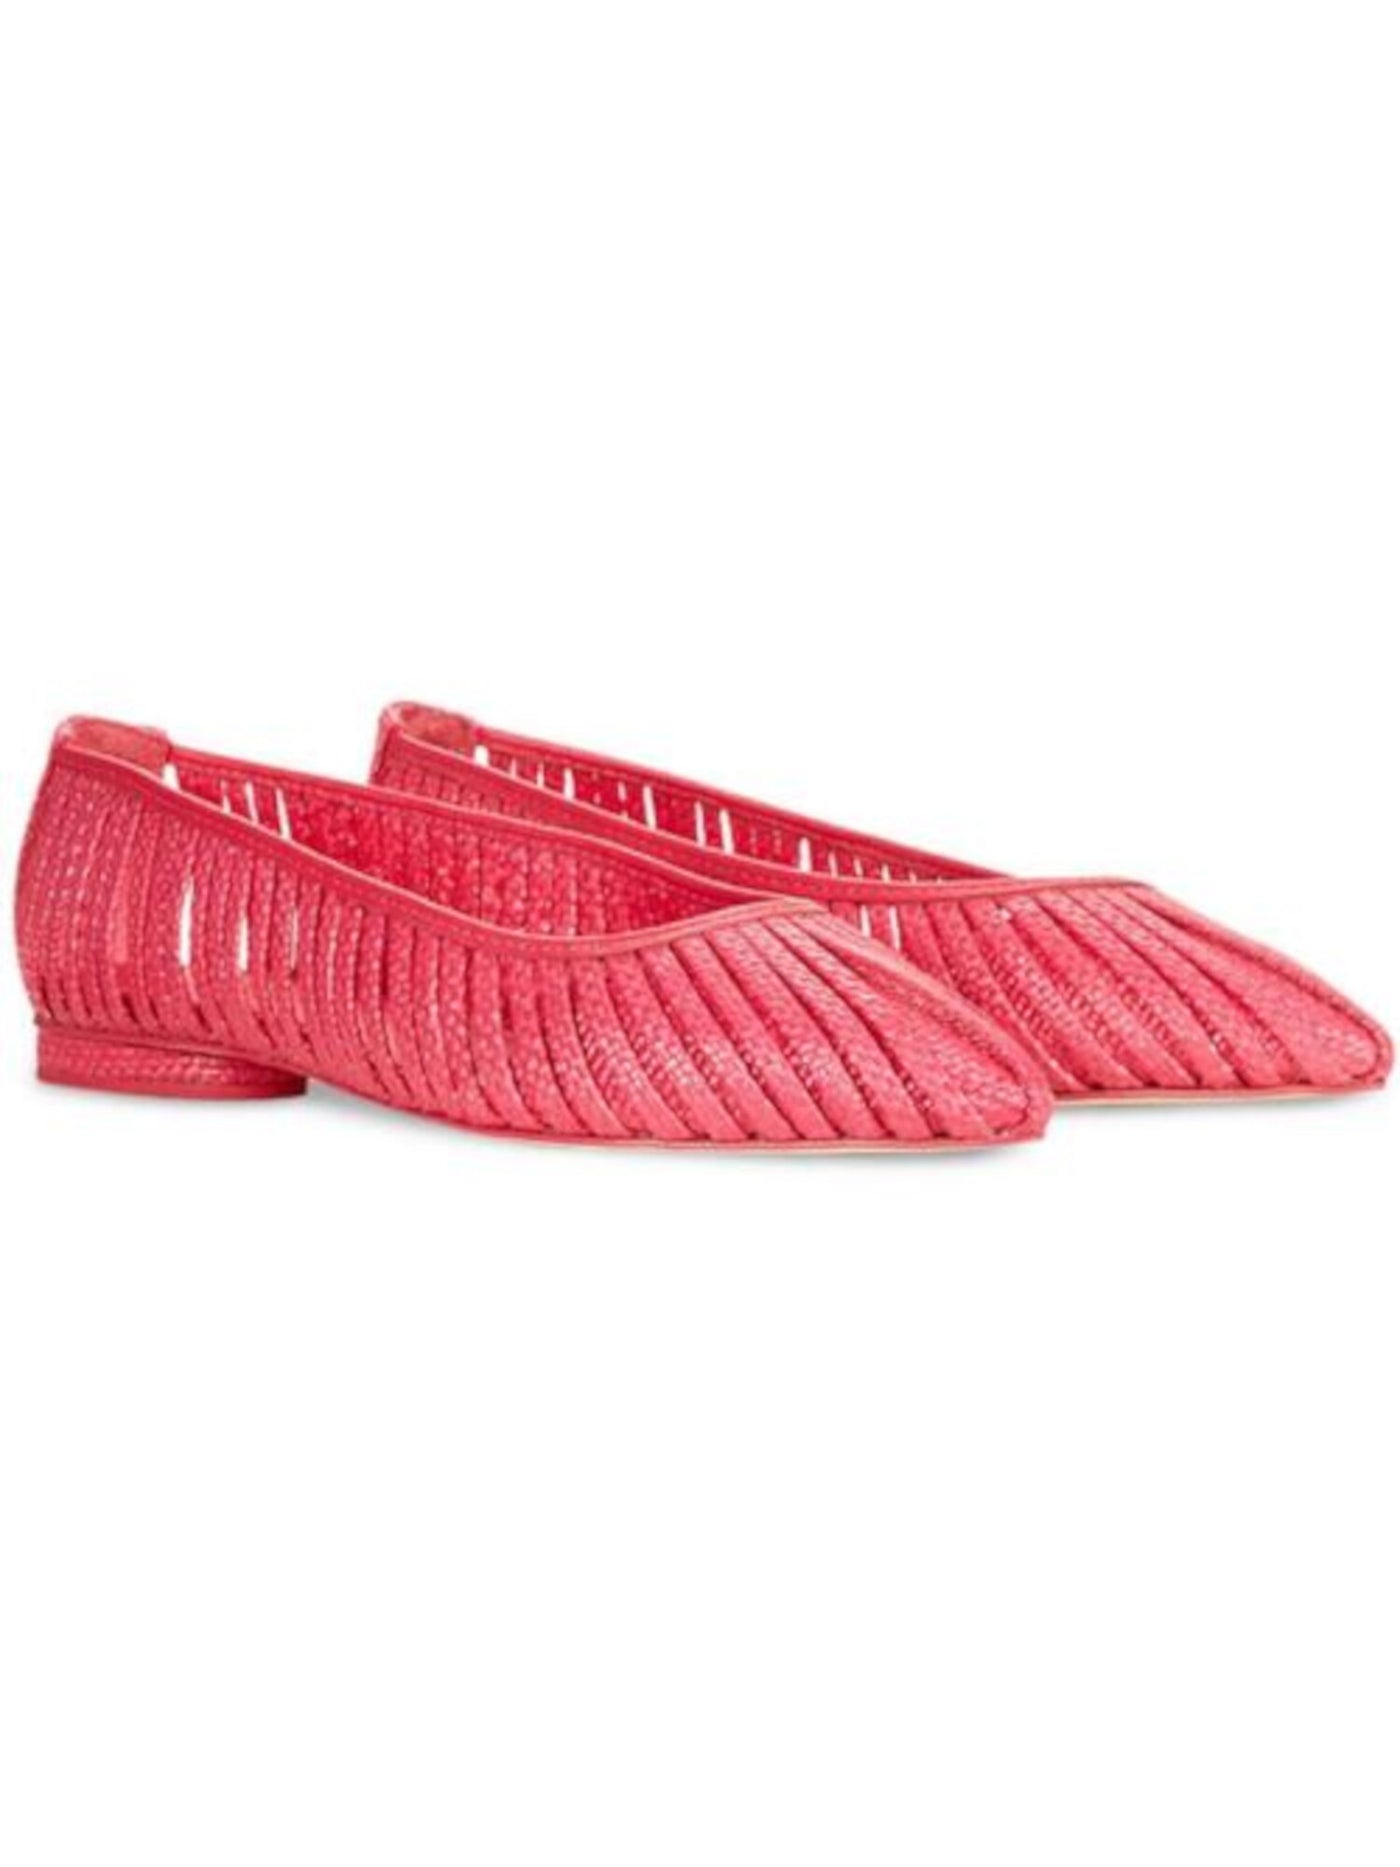 CULT GAIA Womens Camellia Pink Raffia Padded Leena Pointed Toe Slip On Flats Shoes 38.5